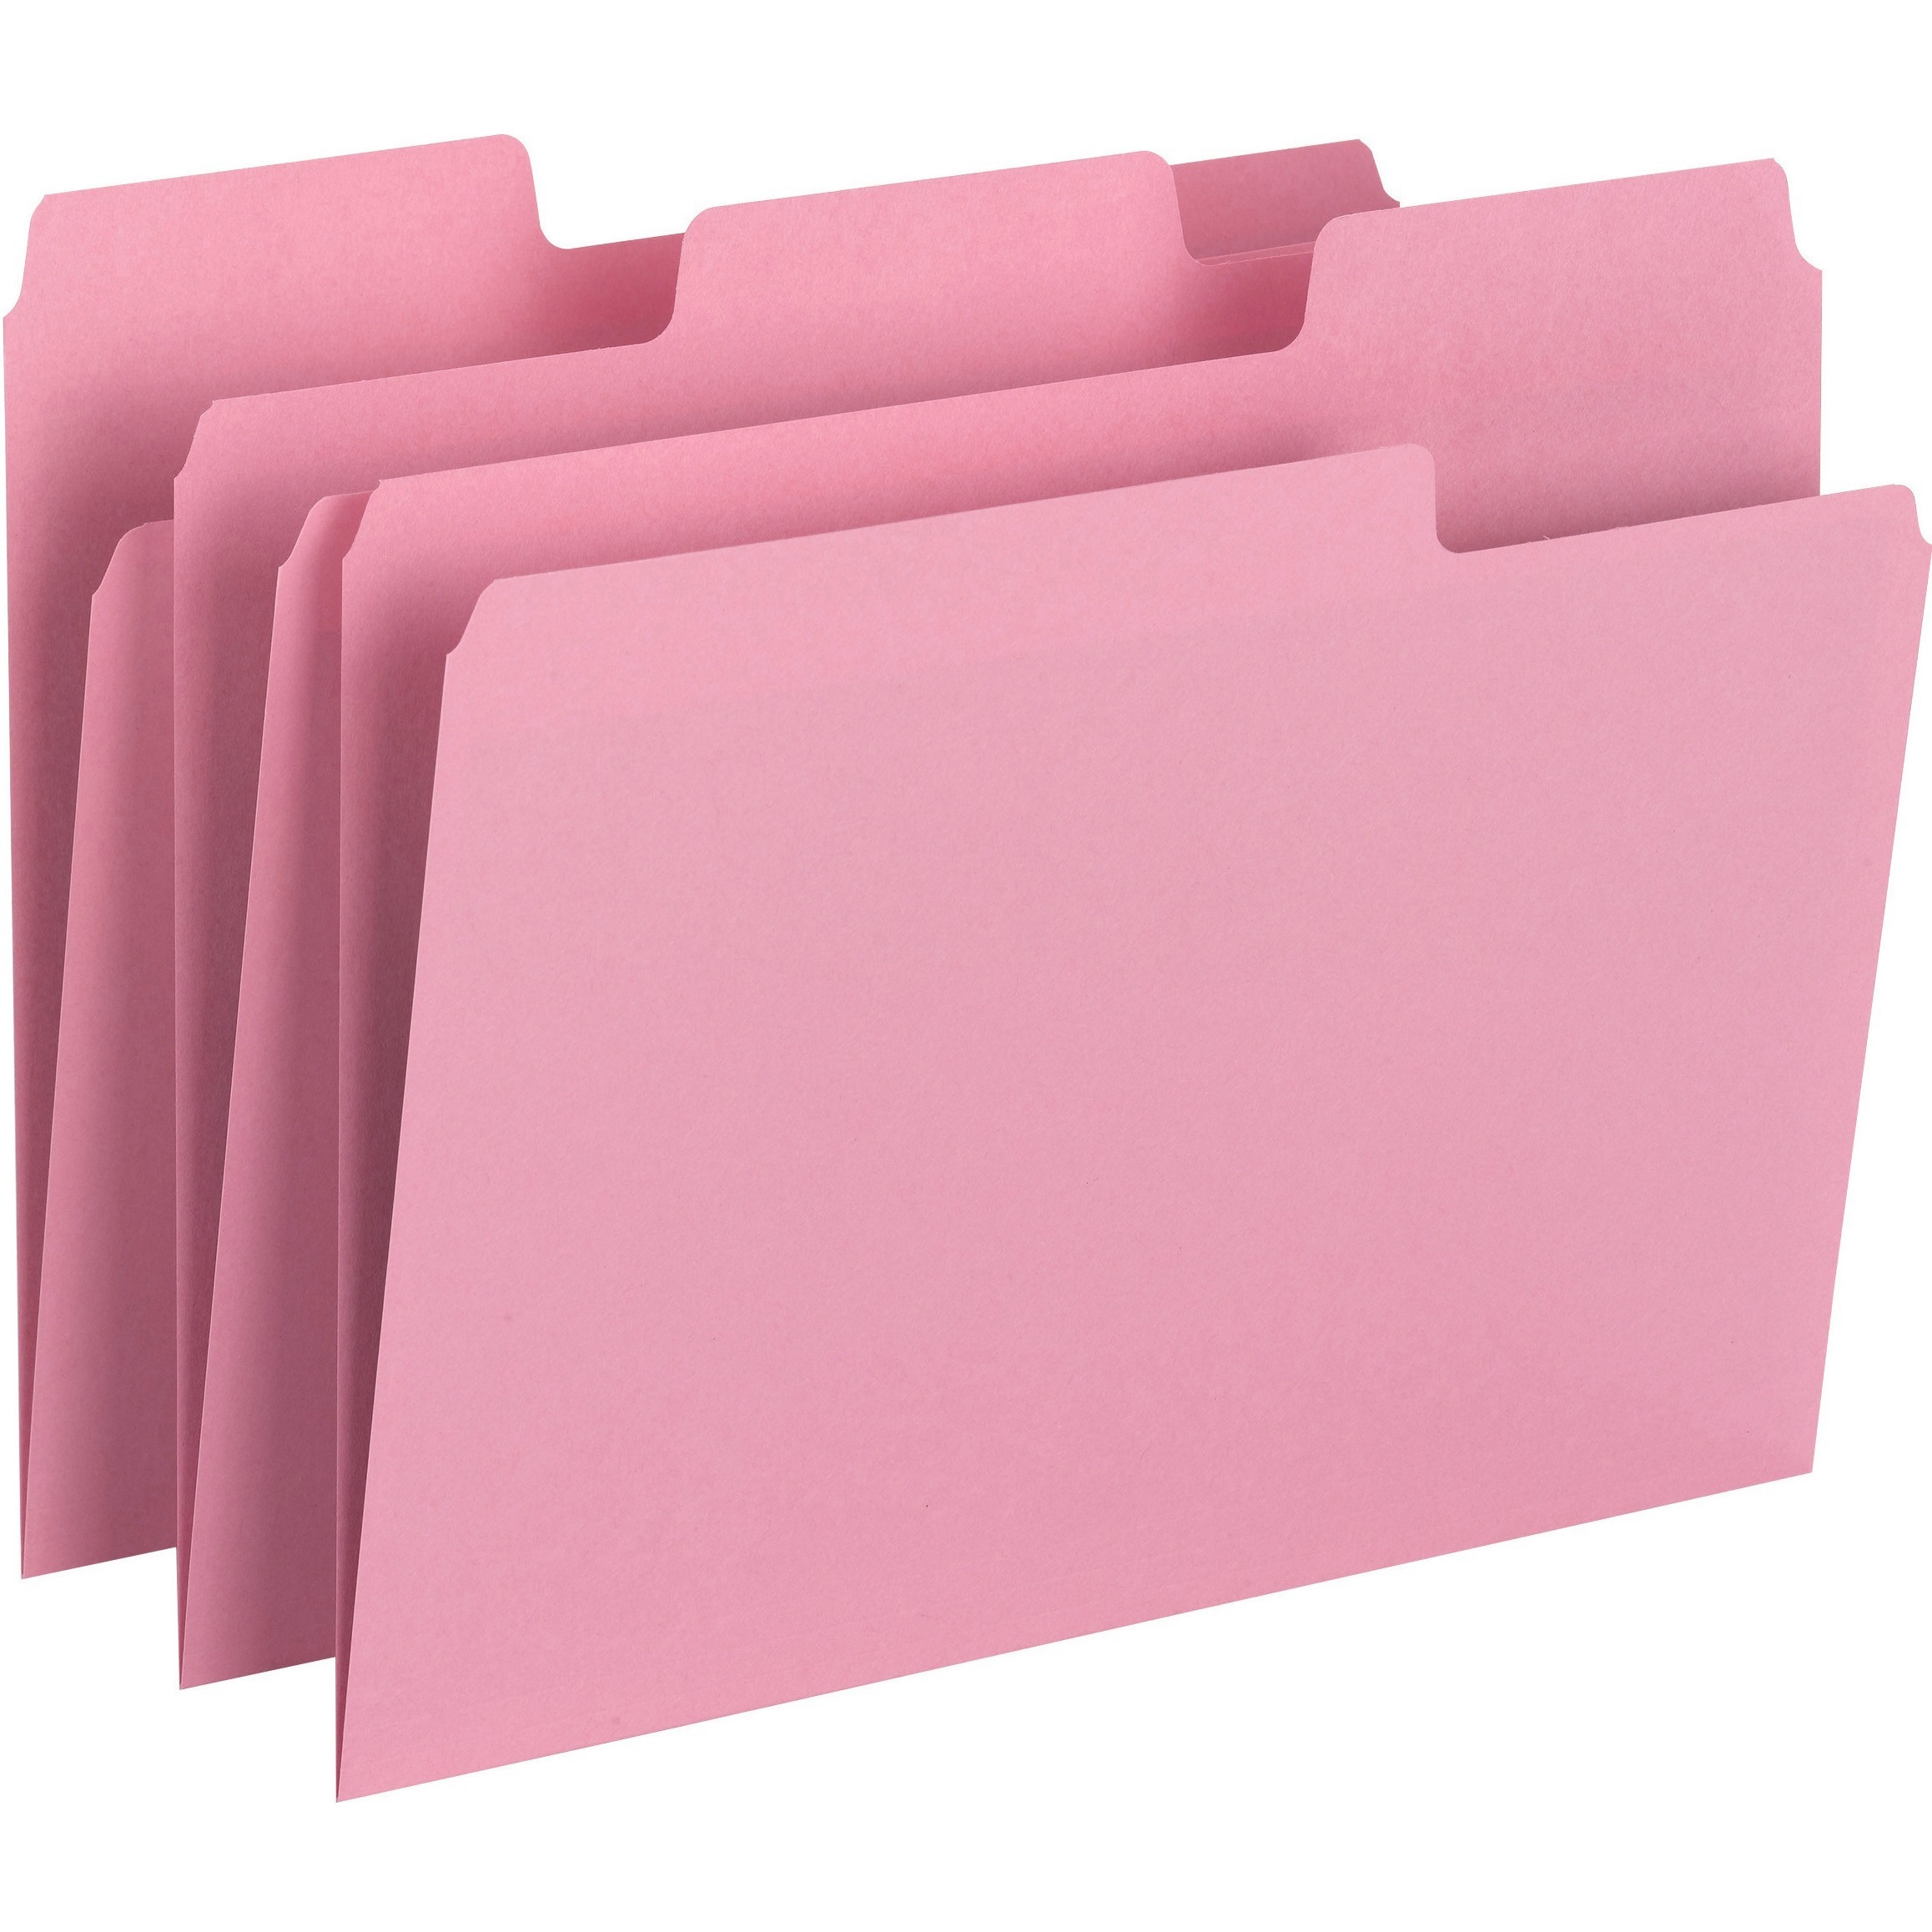 Smead SuperTab Breast Cancer Awareness - File folder - expanding - for Letter - tabbed - pink (pack of 6) - image 3 of 5